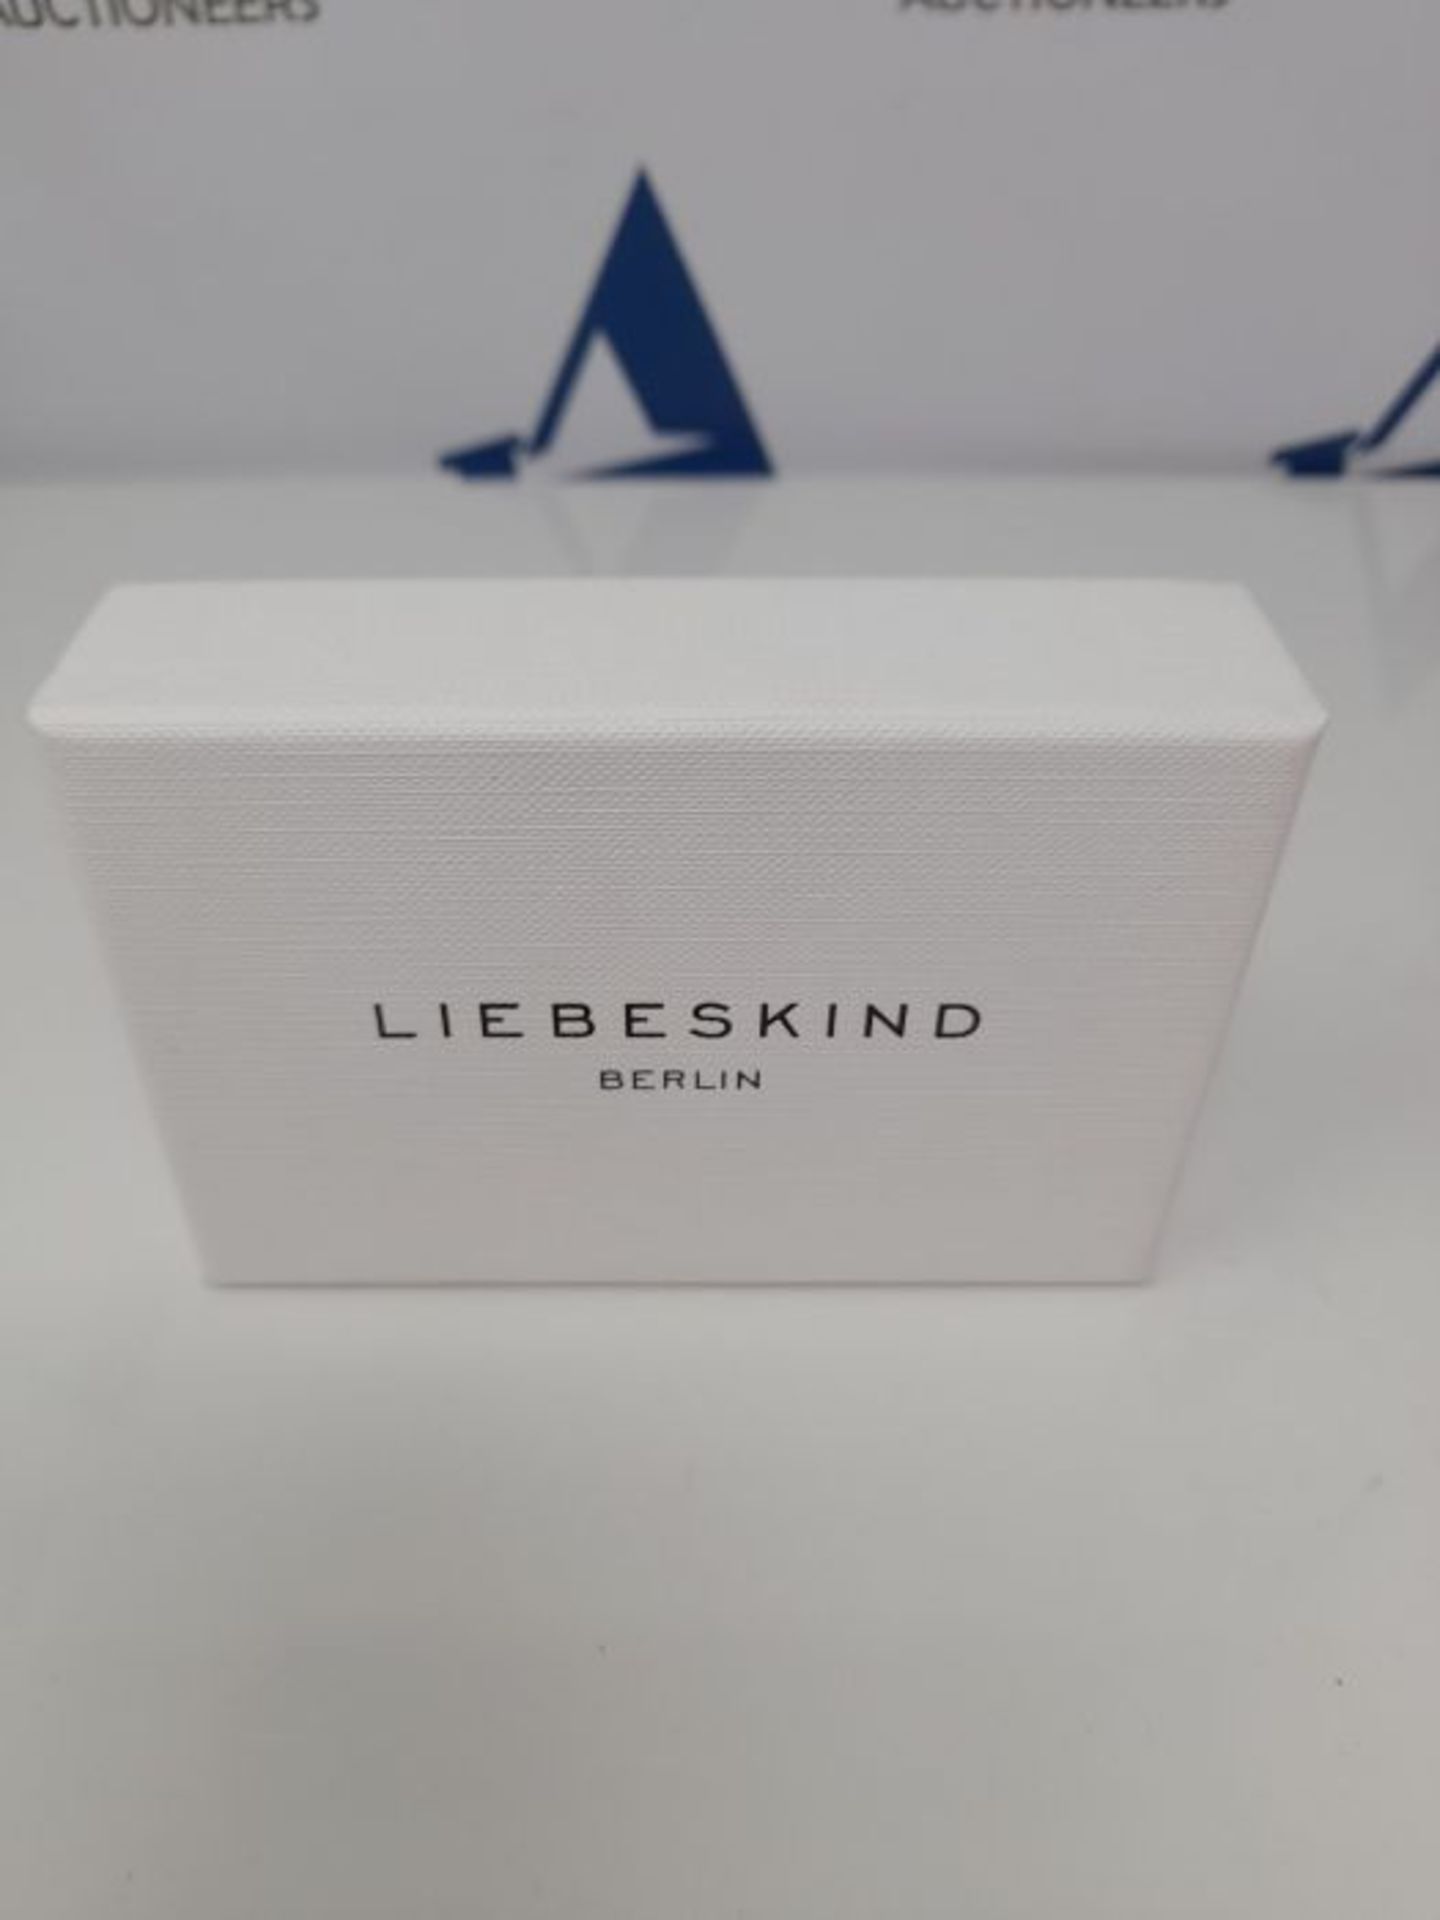 Liebeskind Berlin Bracelet, 20 cm, Stainless Steel, No gemstone., - Image 3 of 6